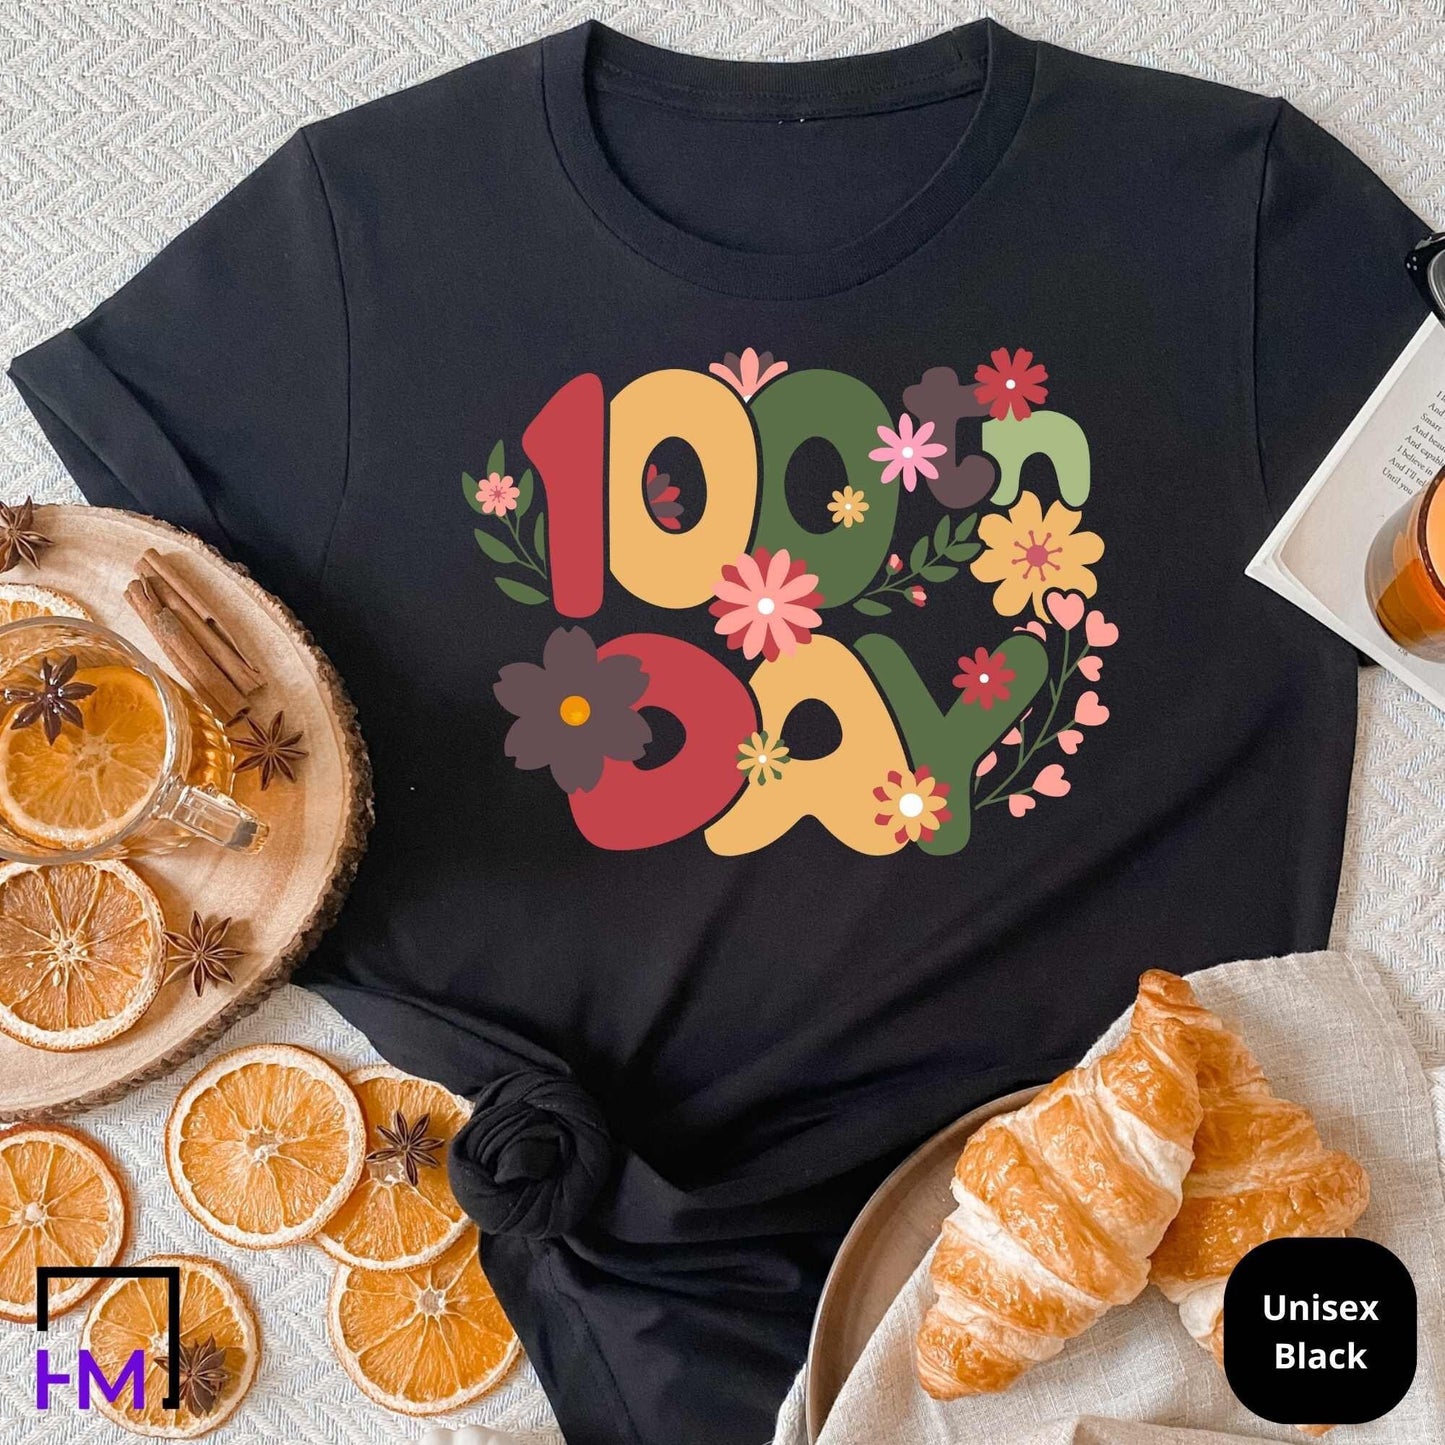 Floral 100 Days of School Shirt HMDesignStudioUS